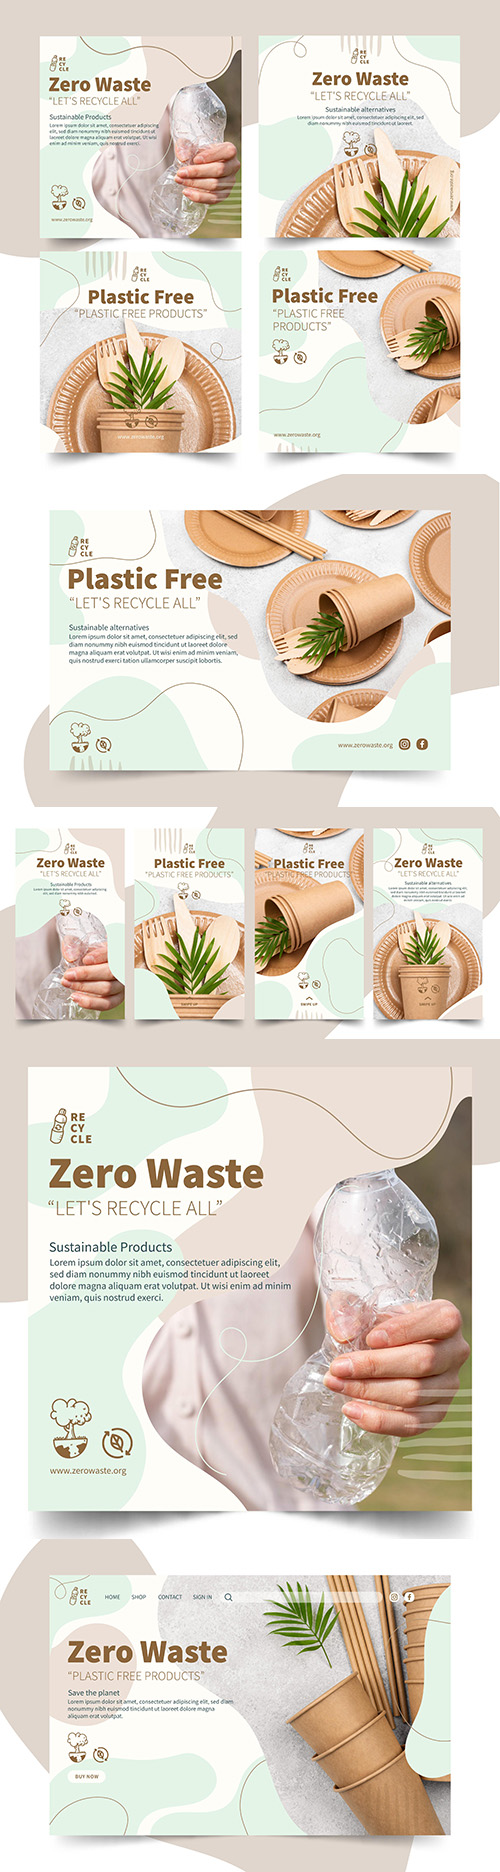 Zero waste and plastic free products design illustration